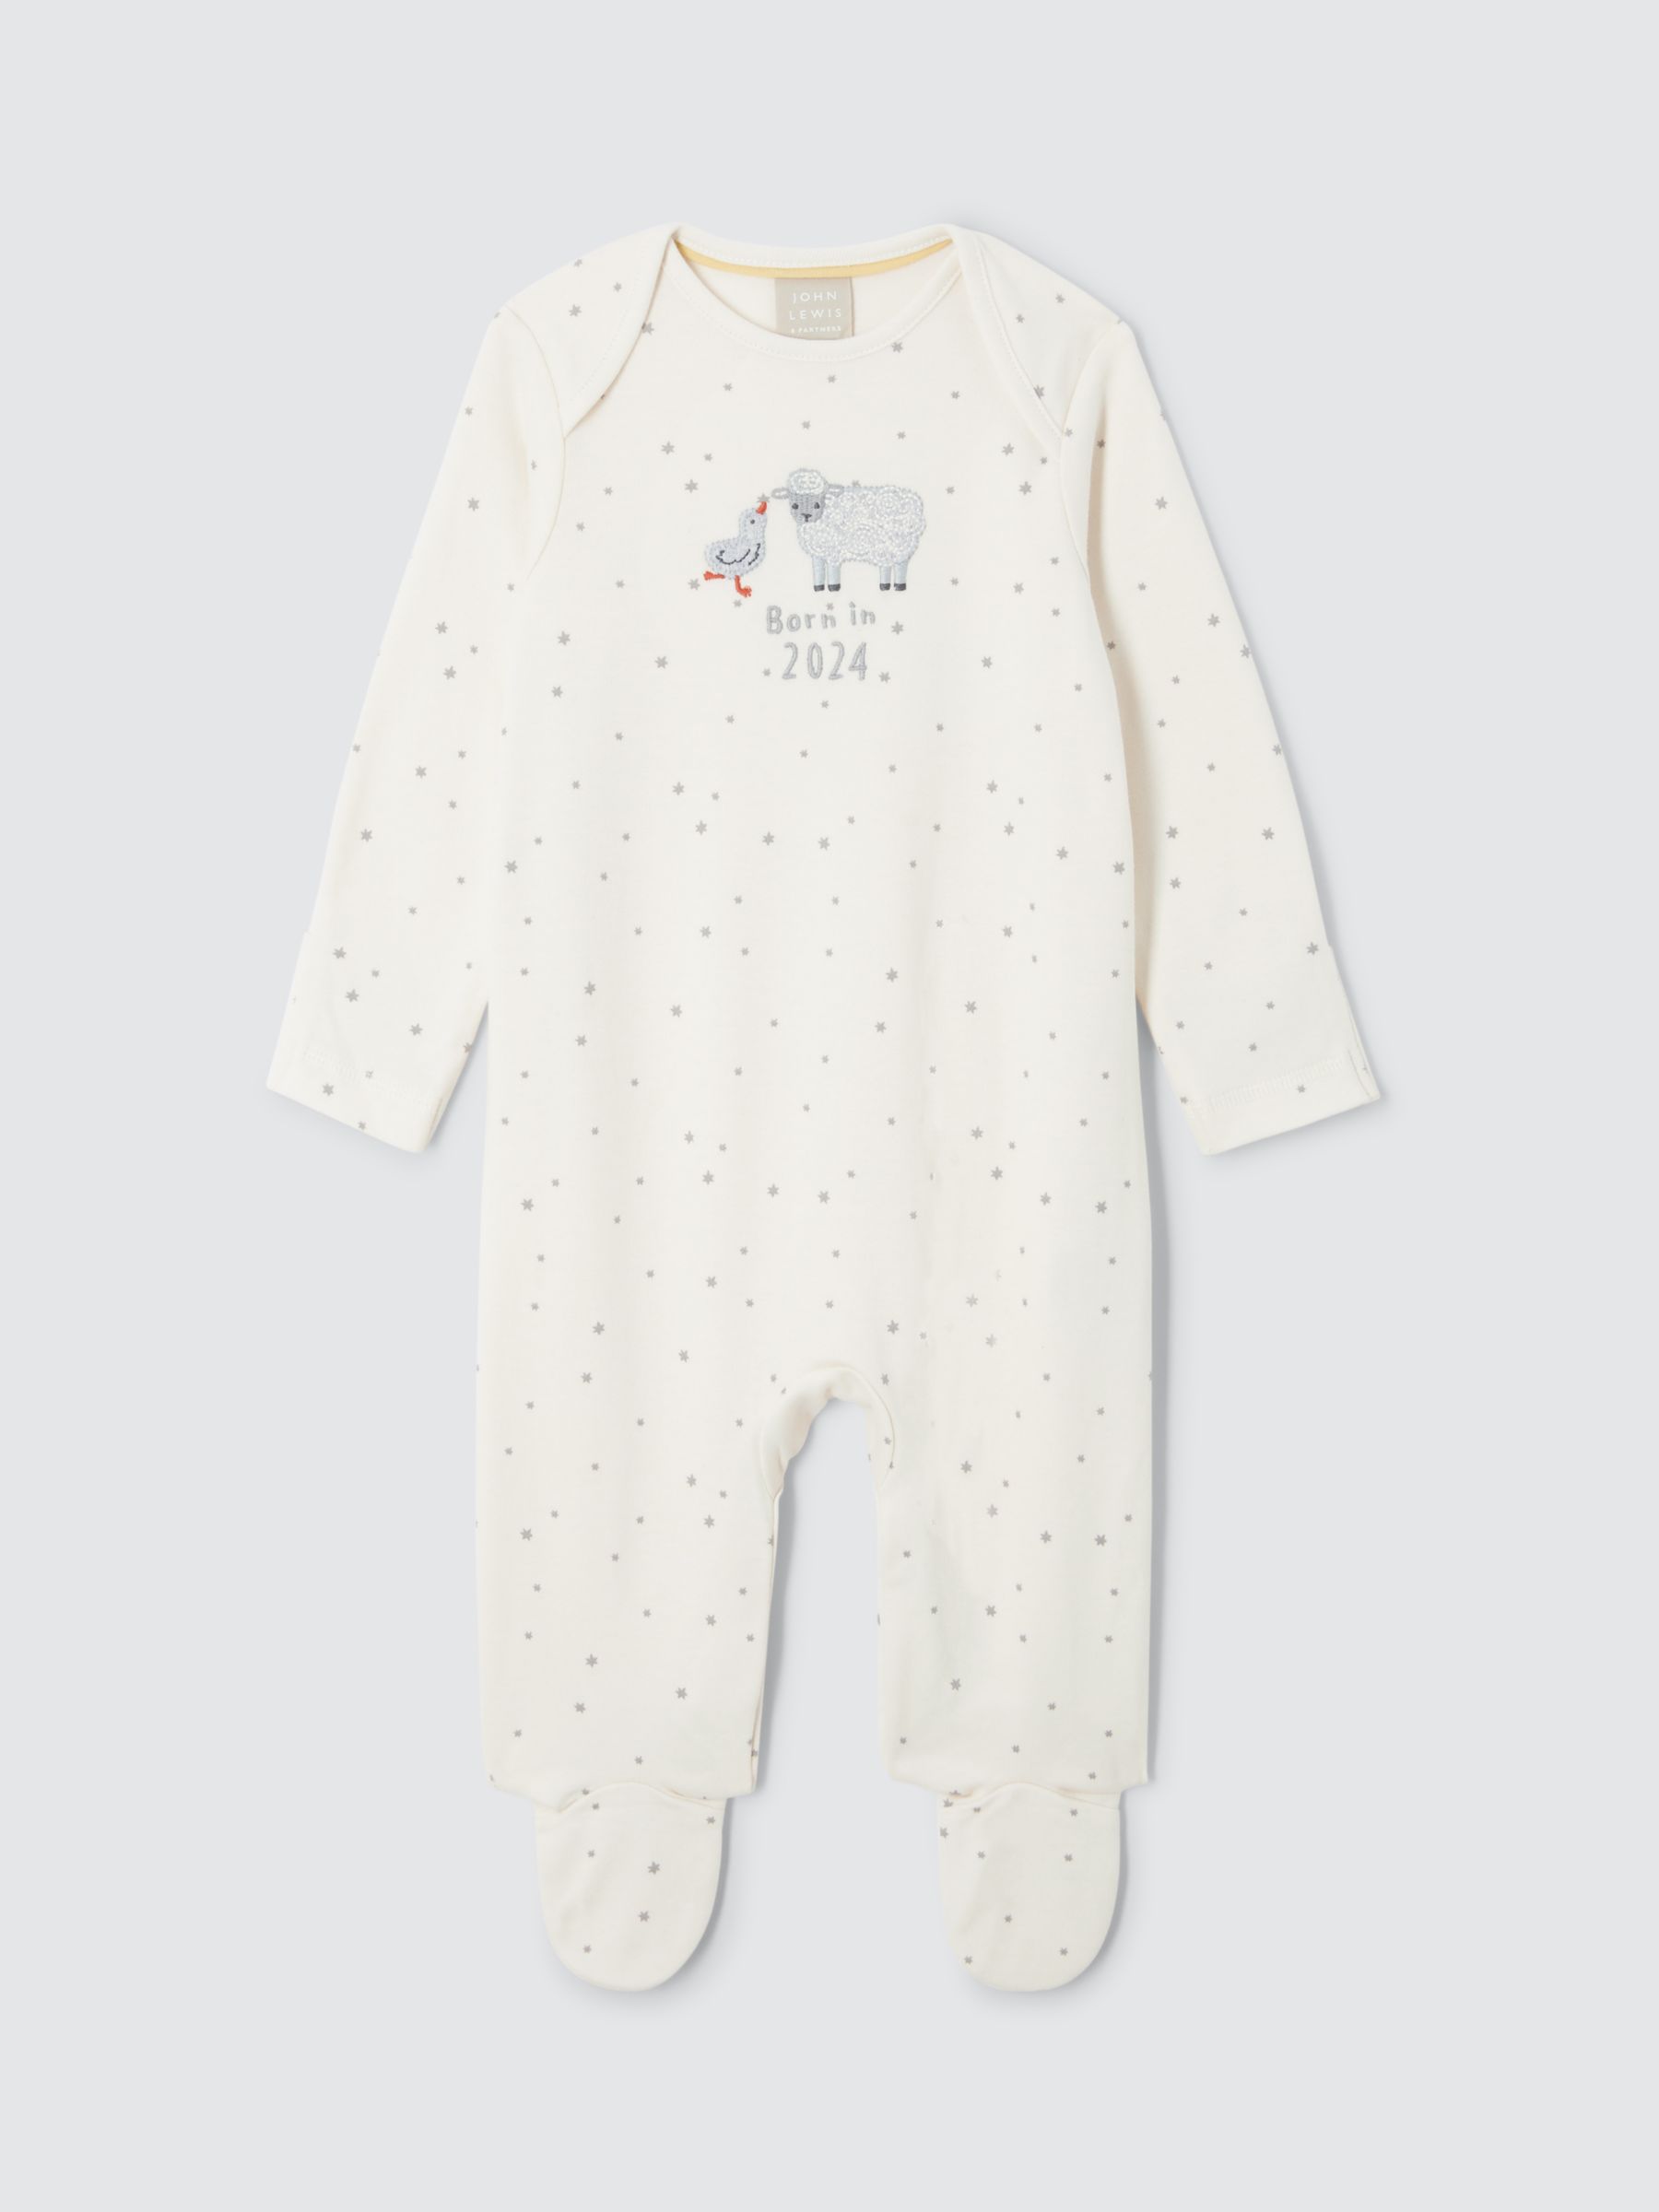 John Lewis Baby Born in 2024 Star Sleepsuit, Cream at John Lewis & Partners